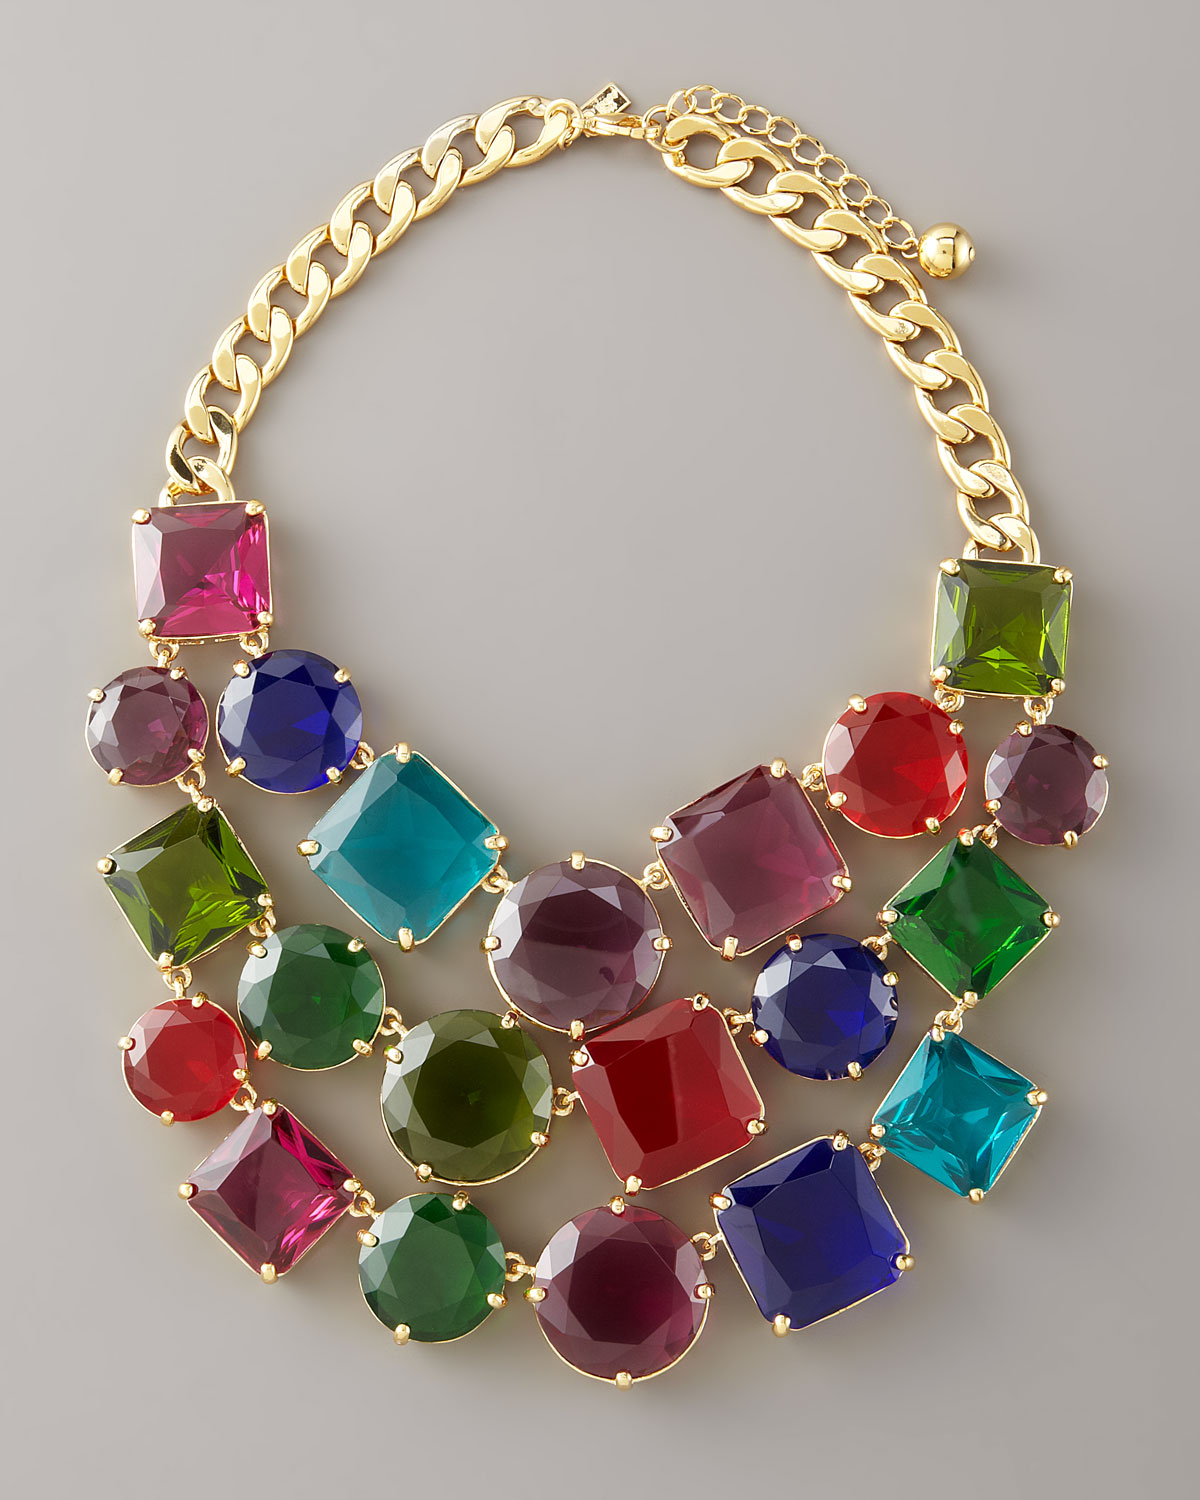 Lyst - Kate Spade New York Multicolor Crystal Bib Necklace